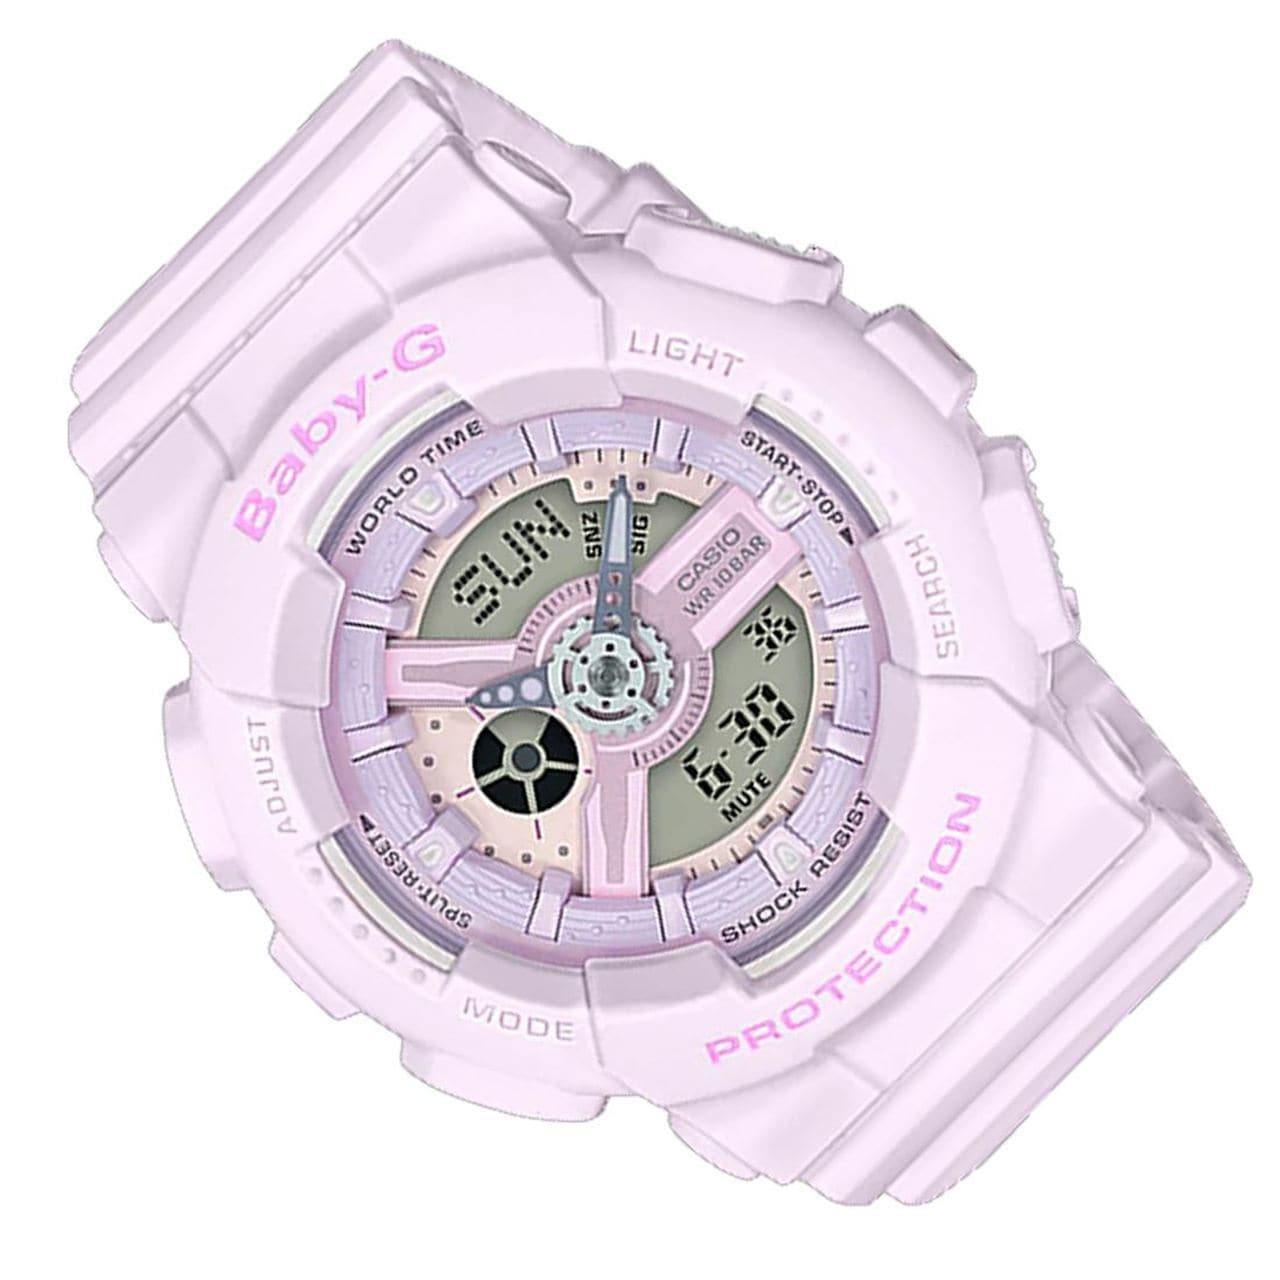 Casio Baby-G BA110 Series Standard Analog-Digital Purple Watch BA110-4A2DR - Prestige